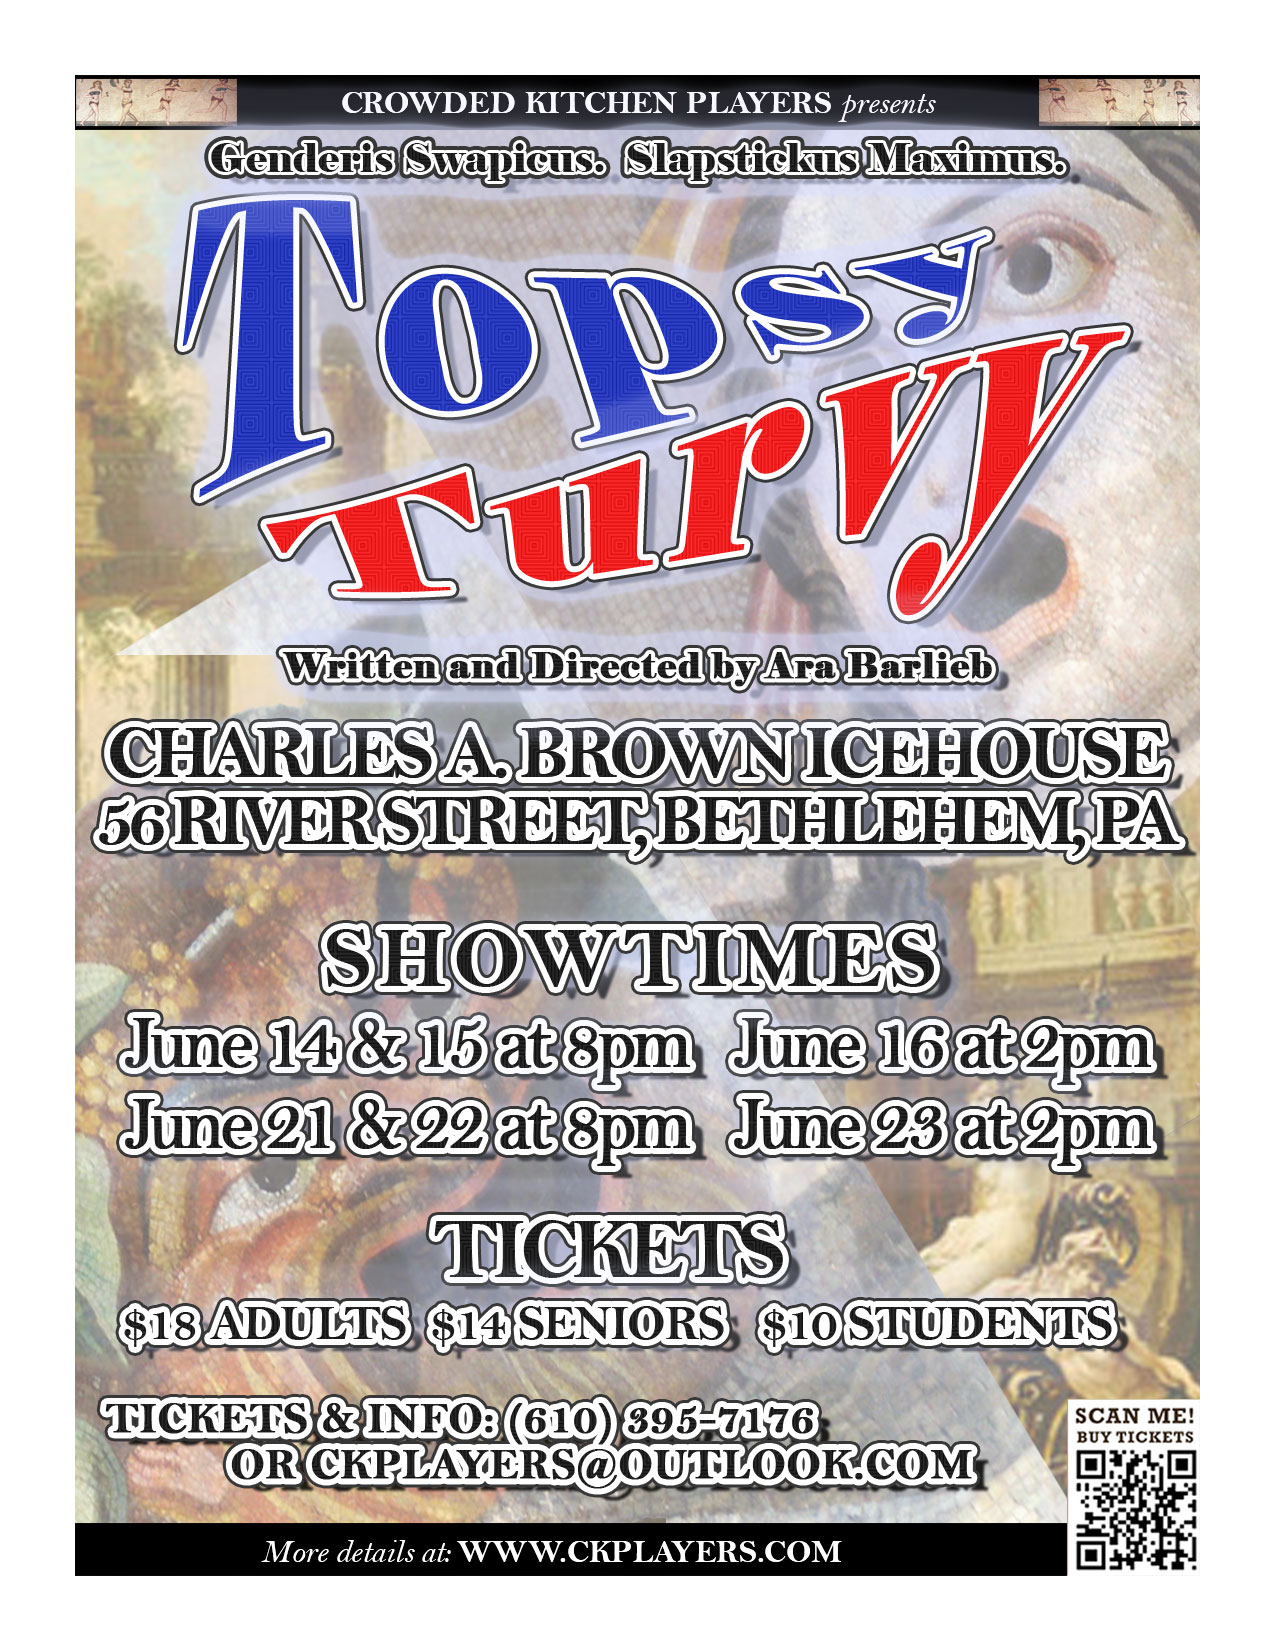 Topsy-Turvy Main Poster